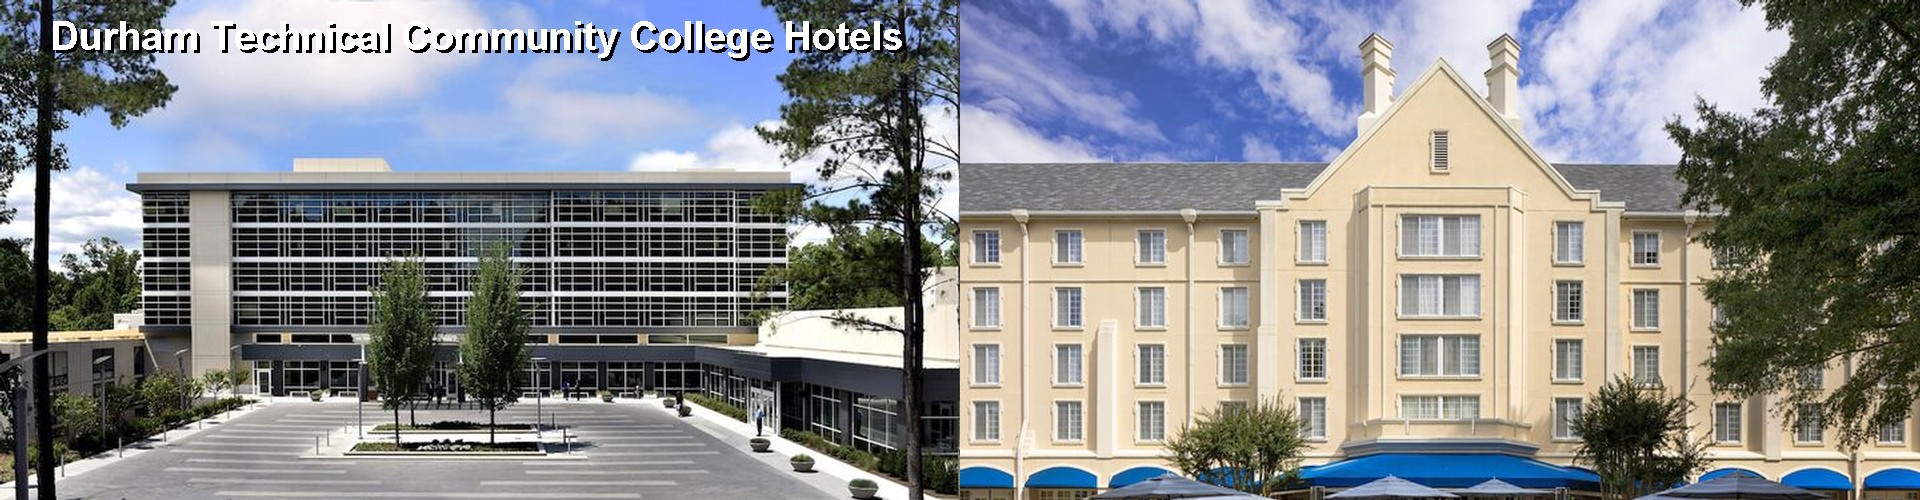 5 Best Hotels near Durham Technical Community College